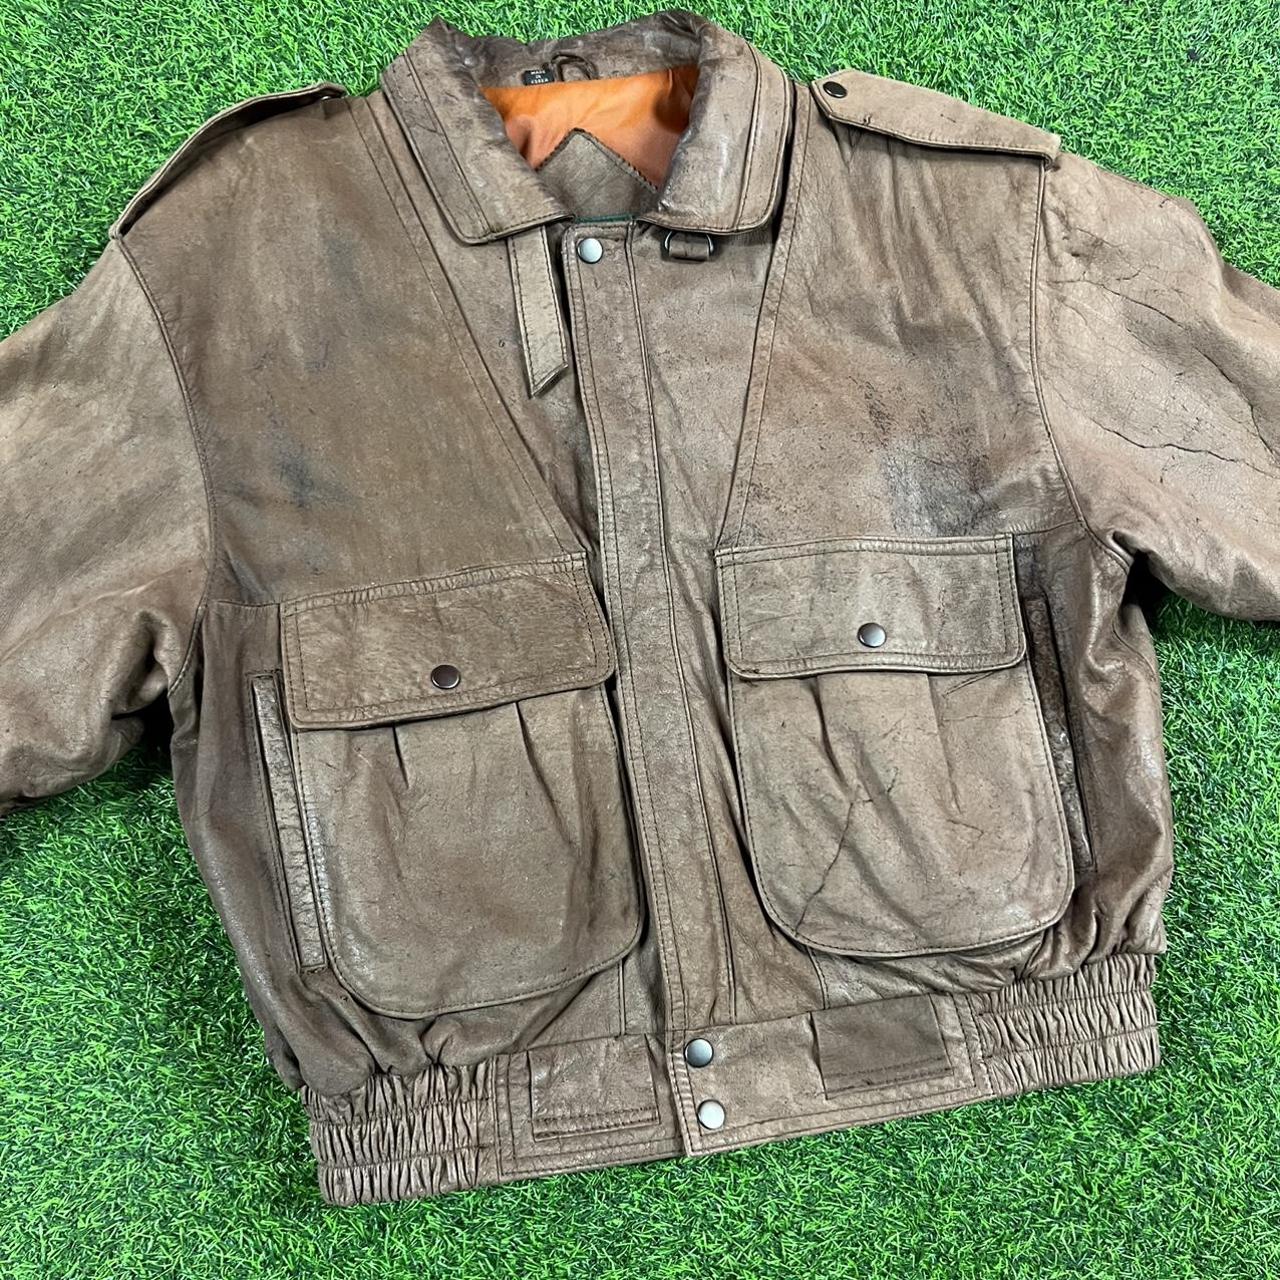 Product Image 3 - Vintage brown leather bomber jacket
G3